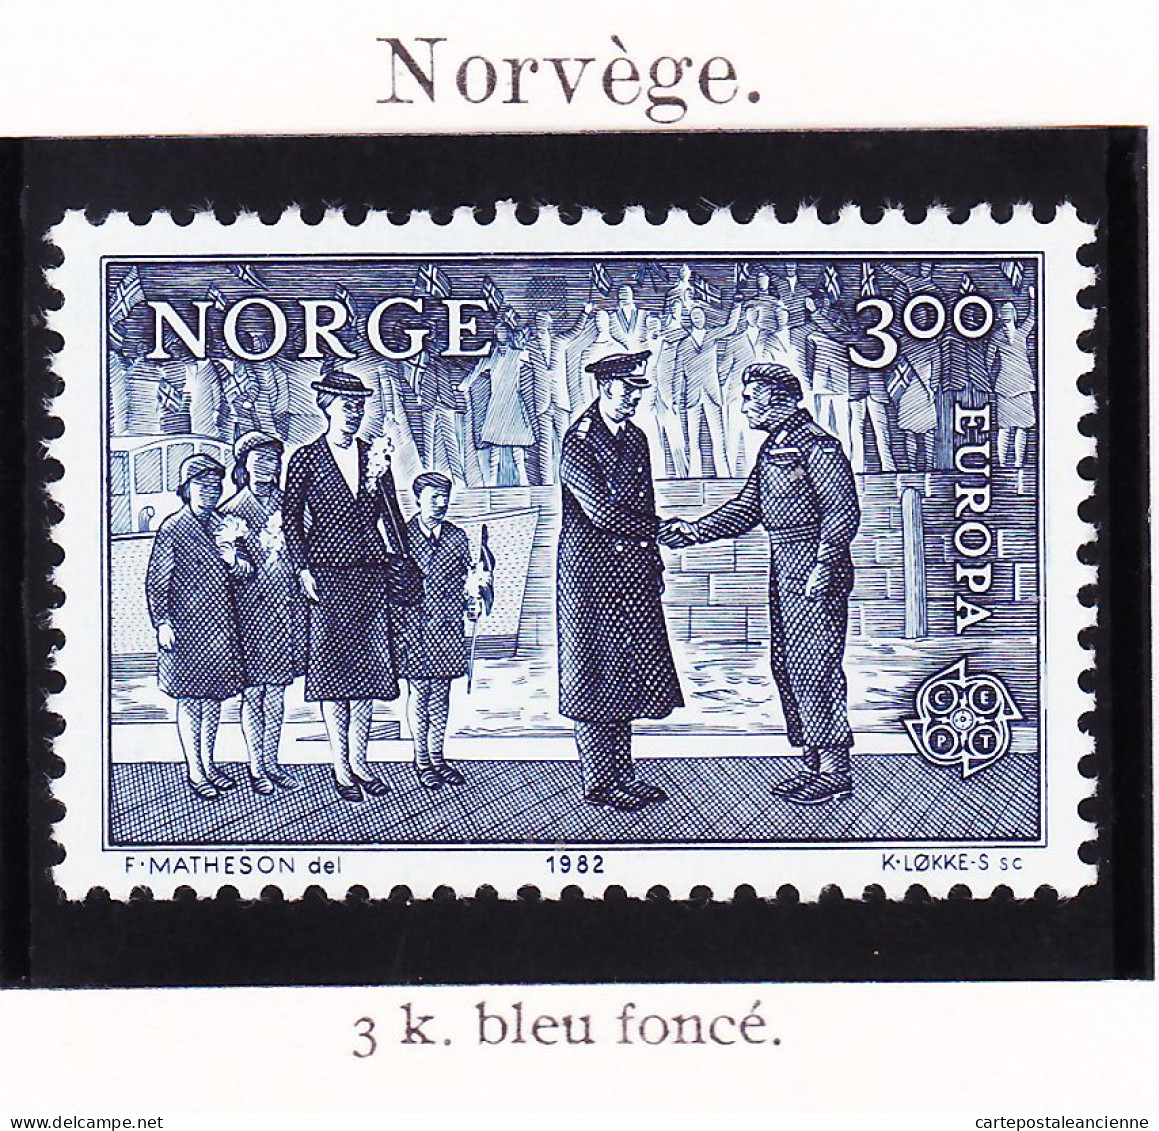 28232 / CEPT EUROPA 1982 NORGE Norvège 300  Yvert-Tellier N° 822 Michel N° 866  ** MNH C.E.P.T - 1982